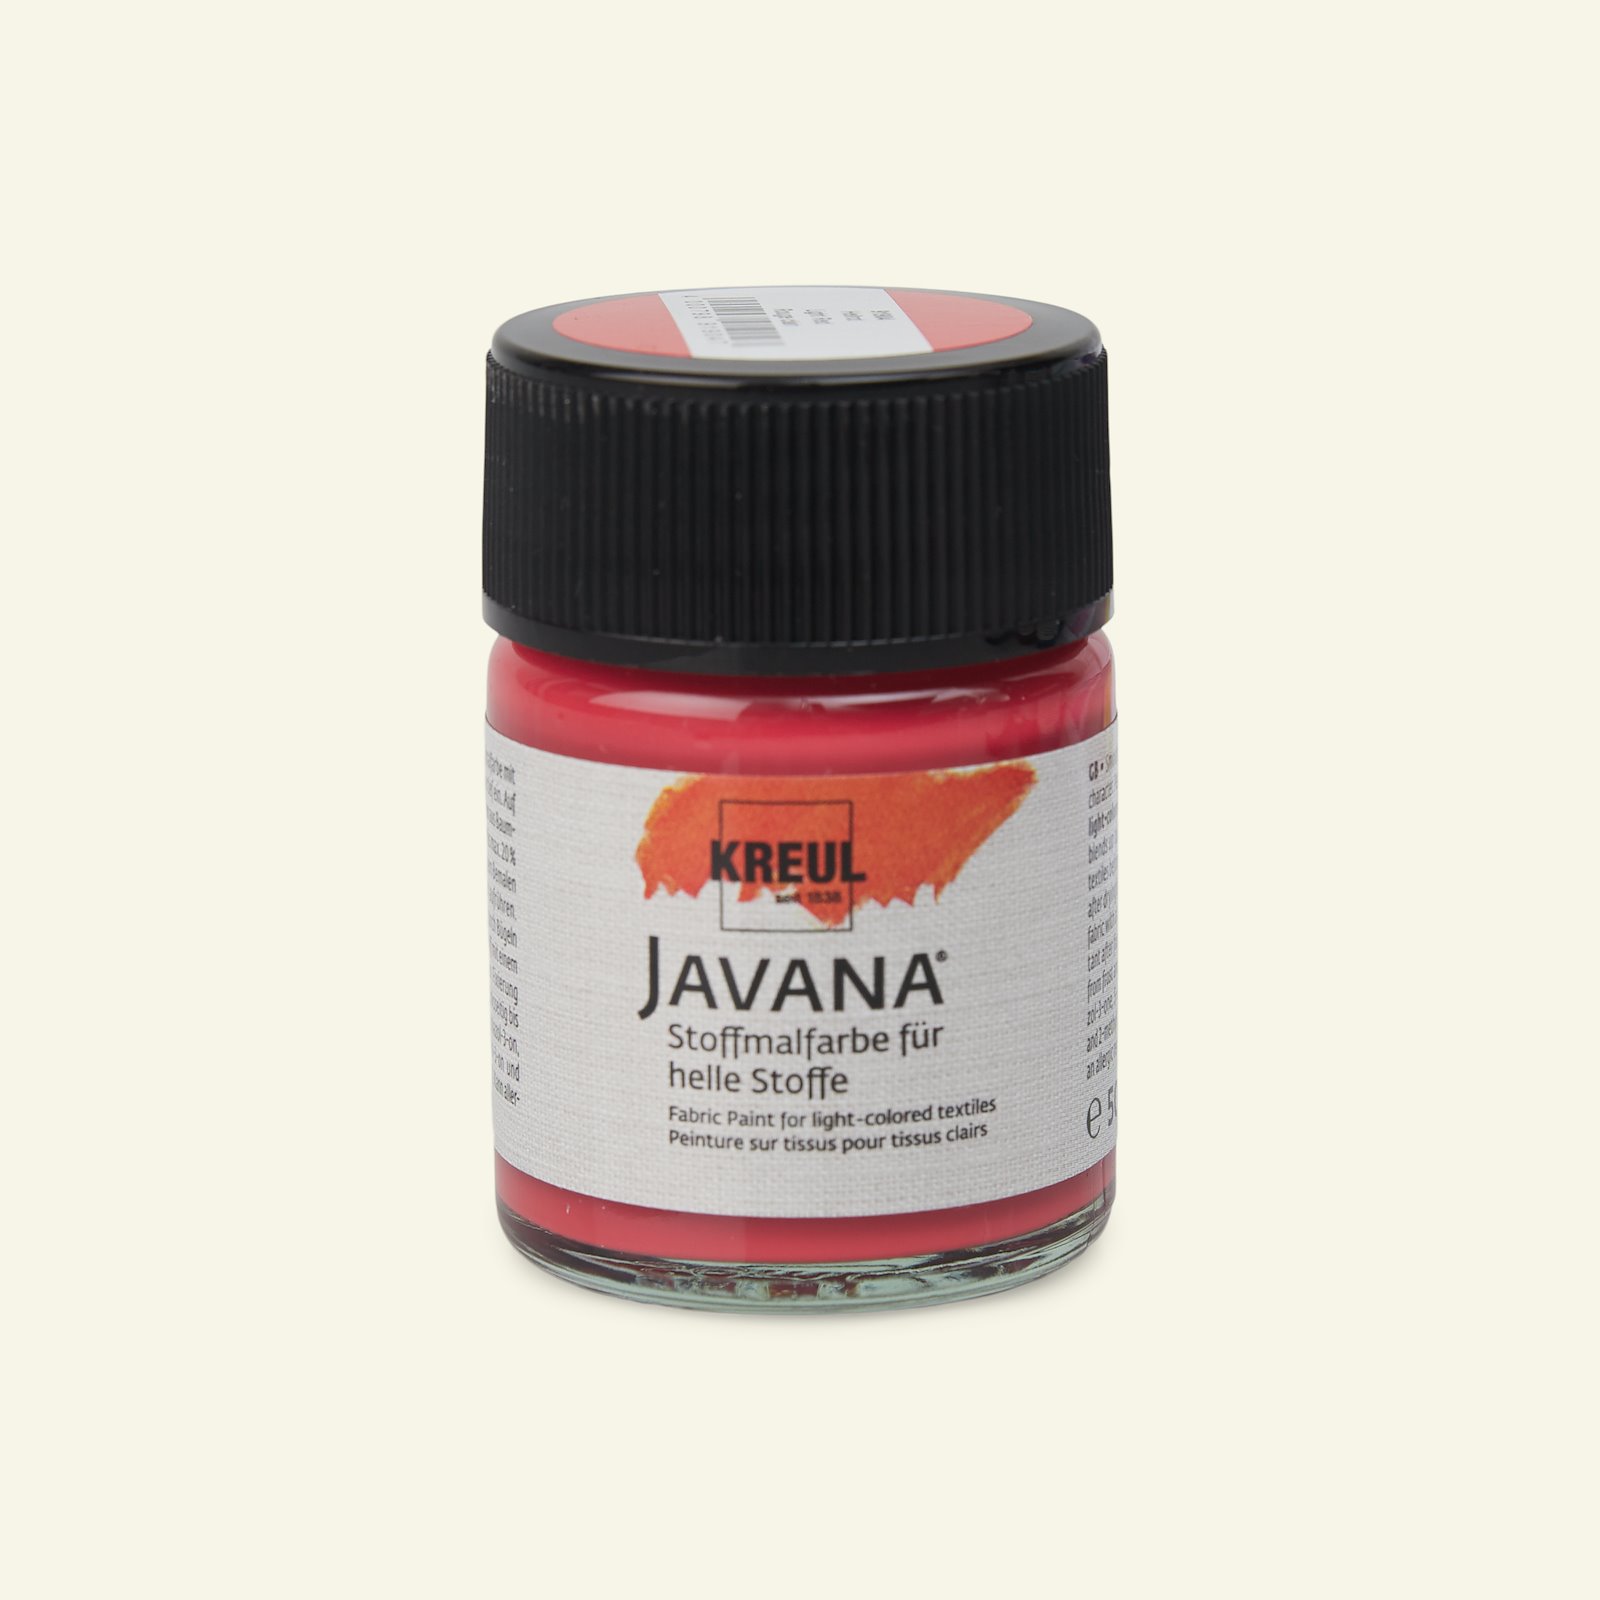 Javana tekstilfarve lys rød 50ml 29604_pack_b